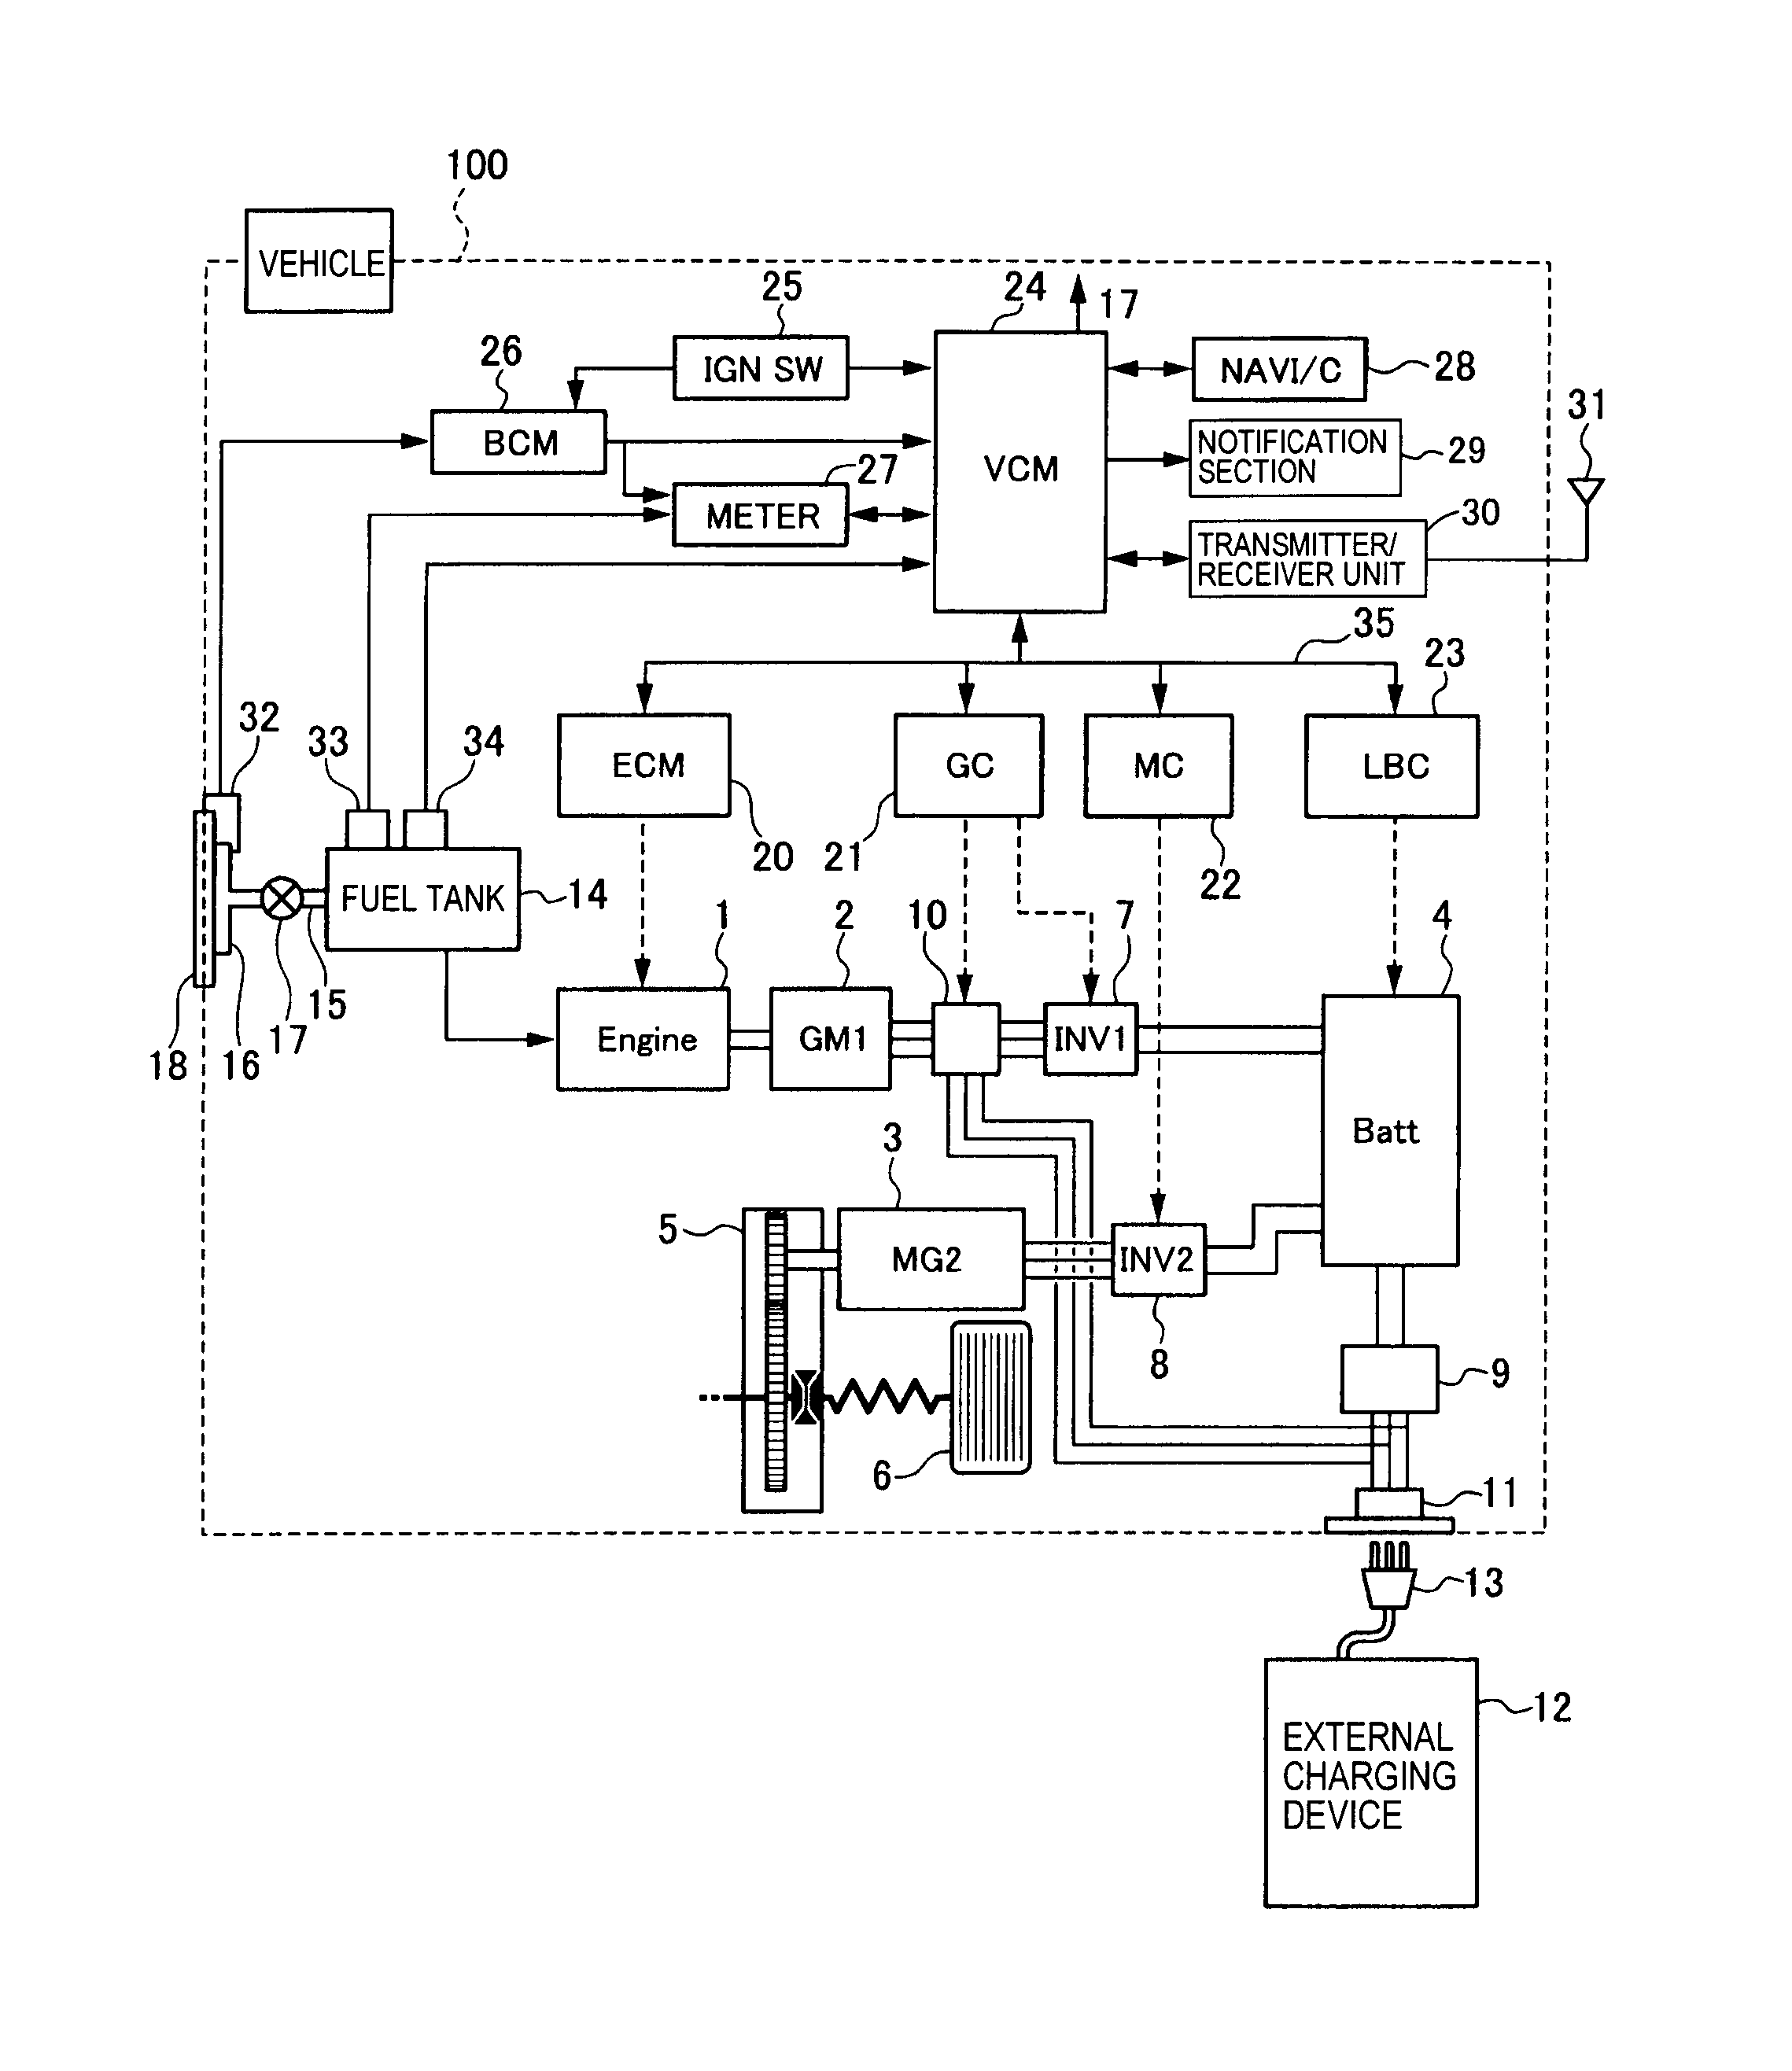 1969 plymouth gtx alternator wiring diagram